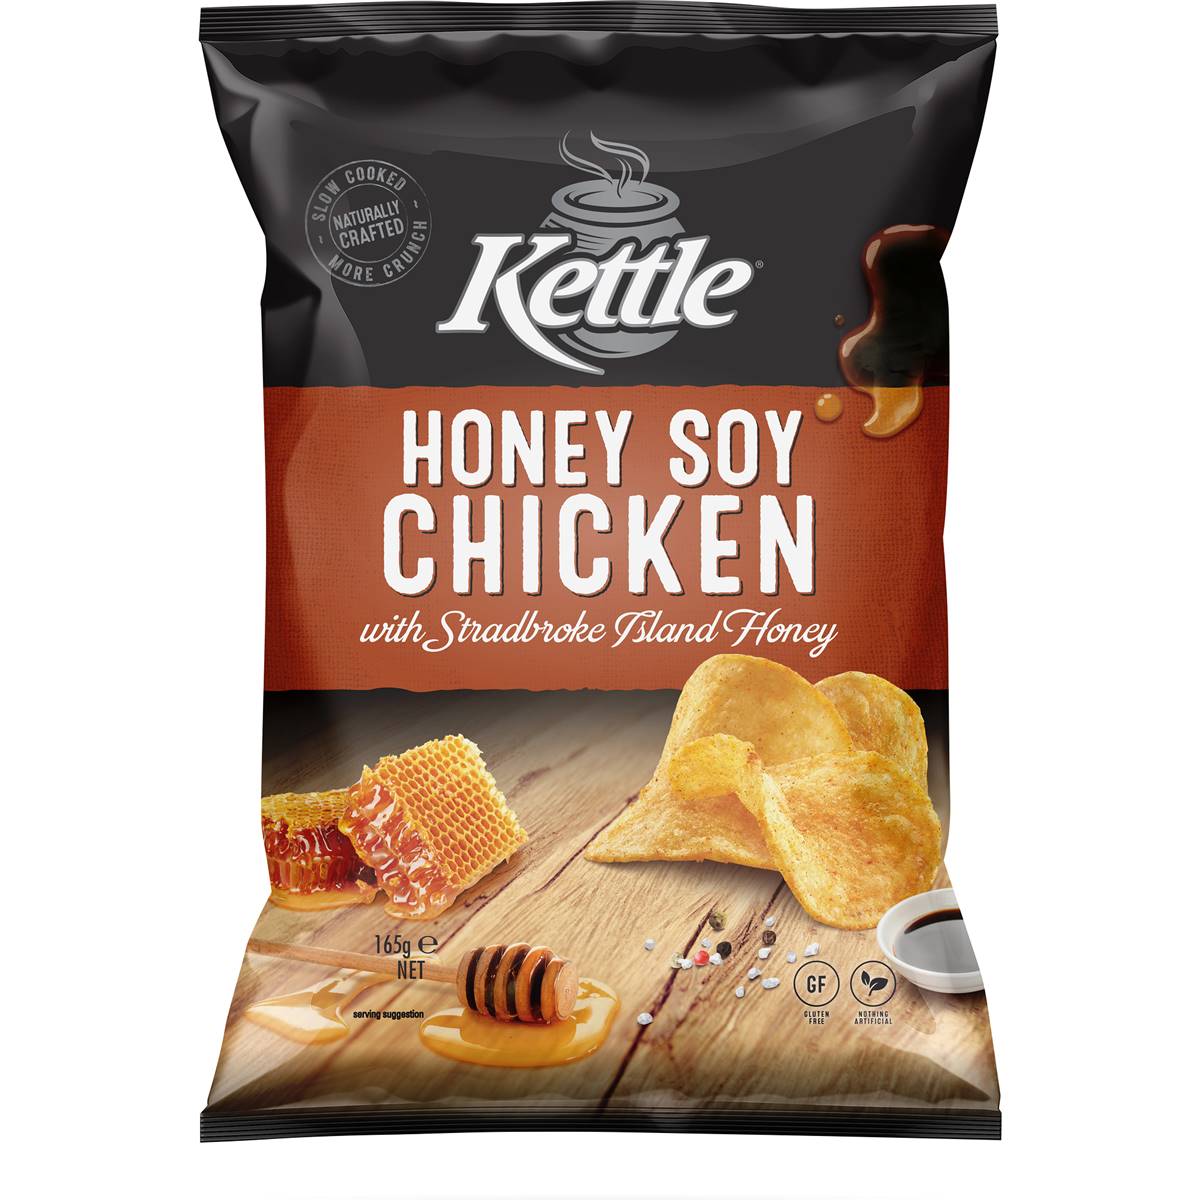 Kettle Chips Honey Soy Chicken 165g